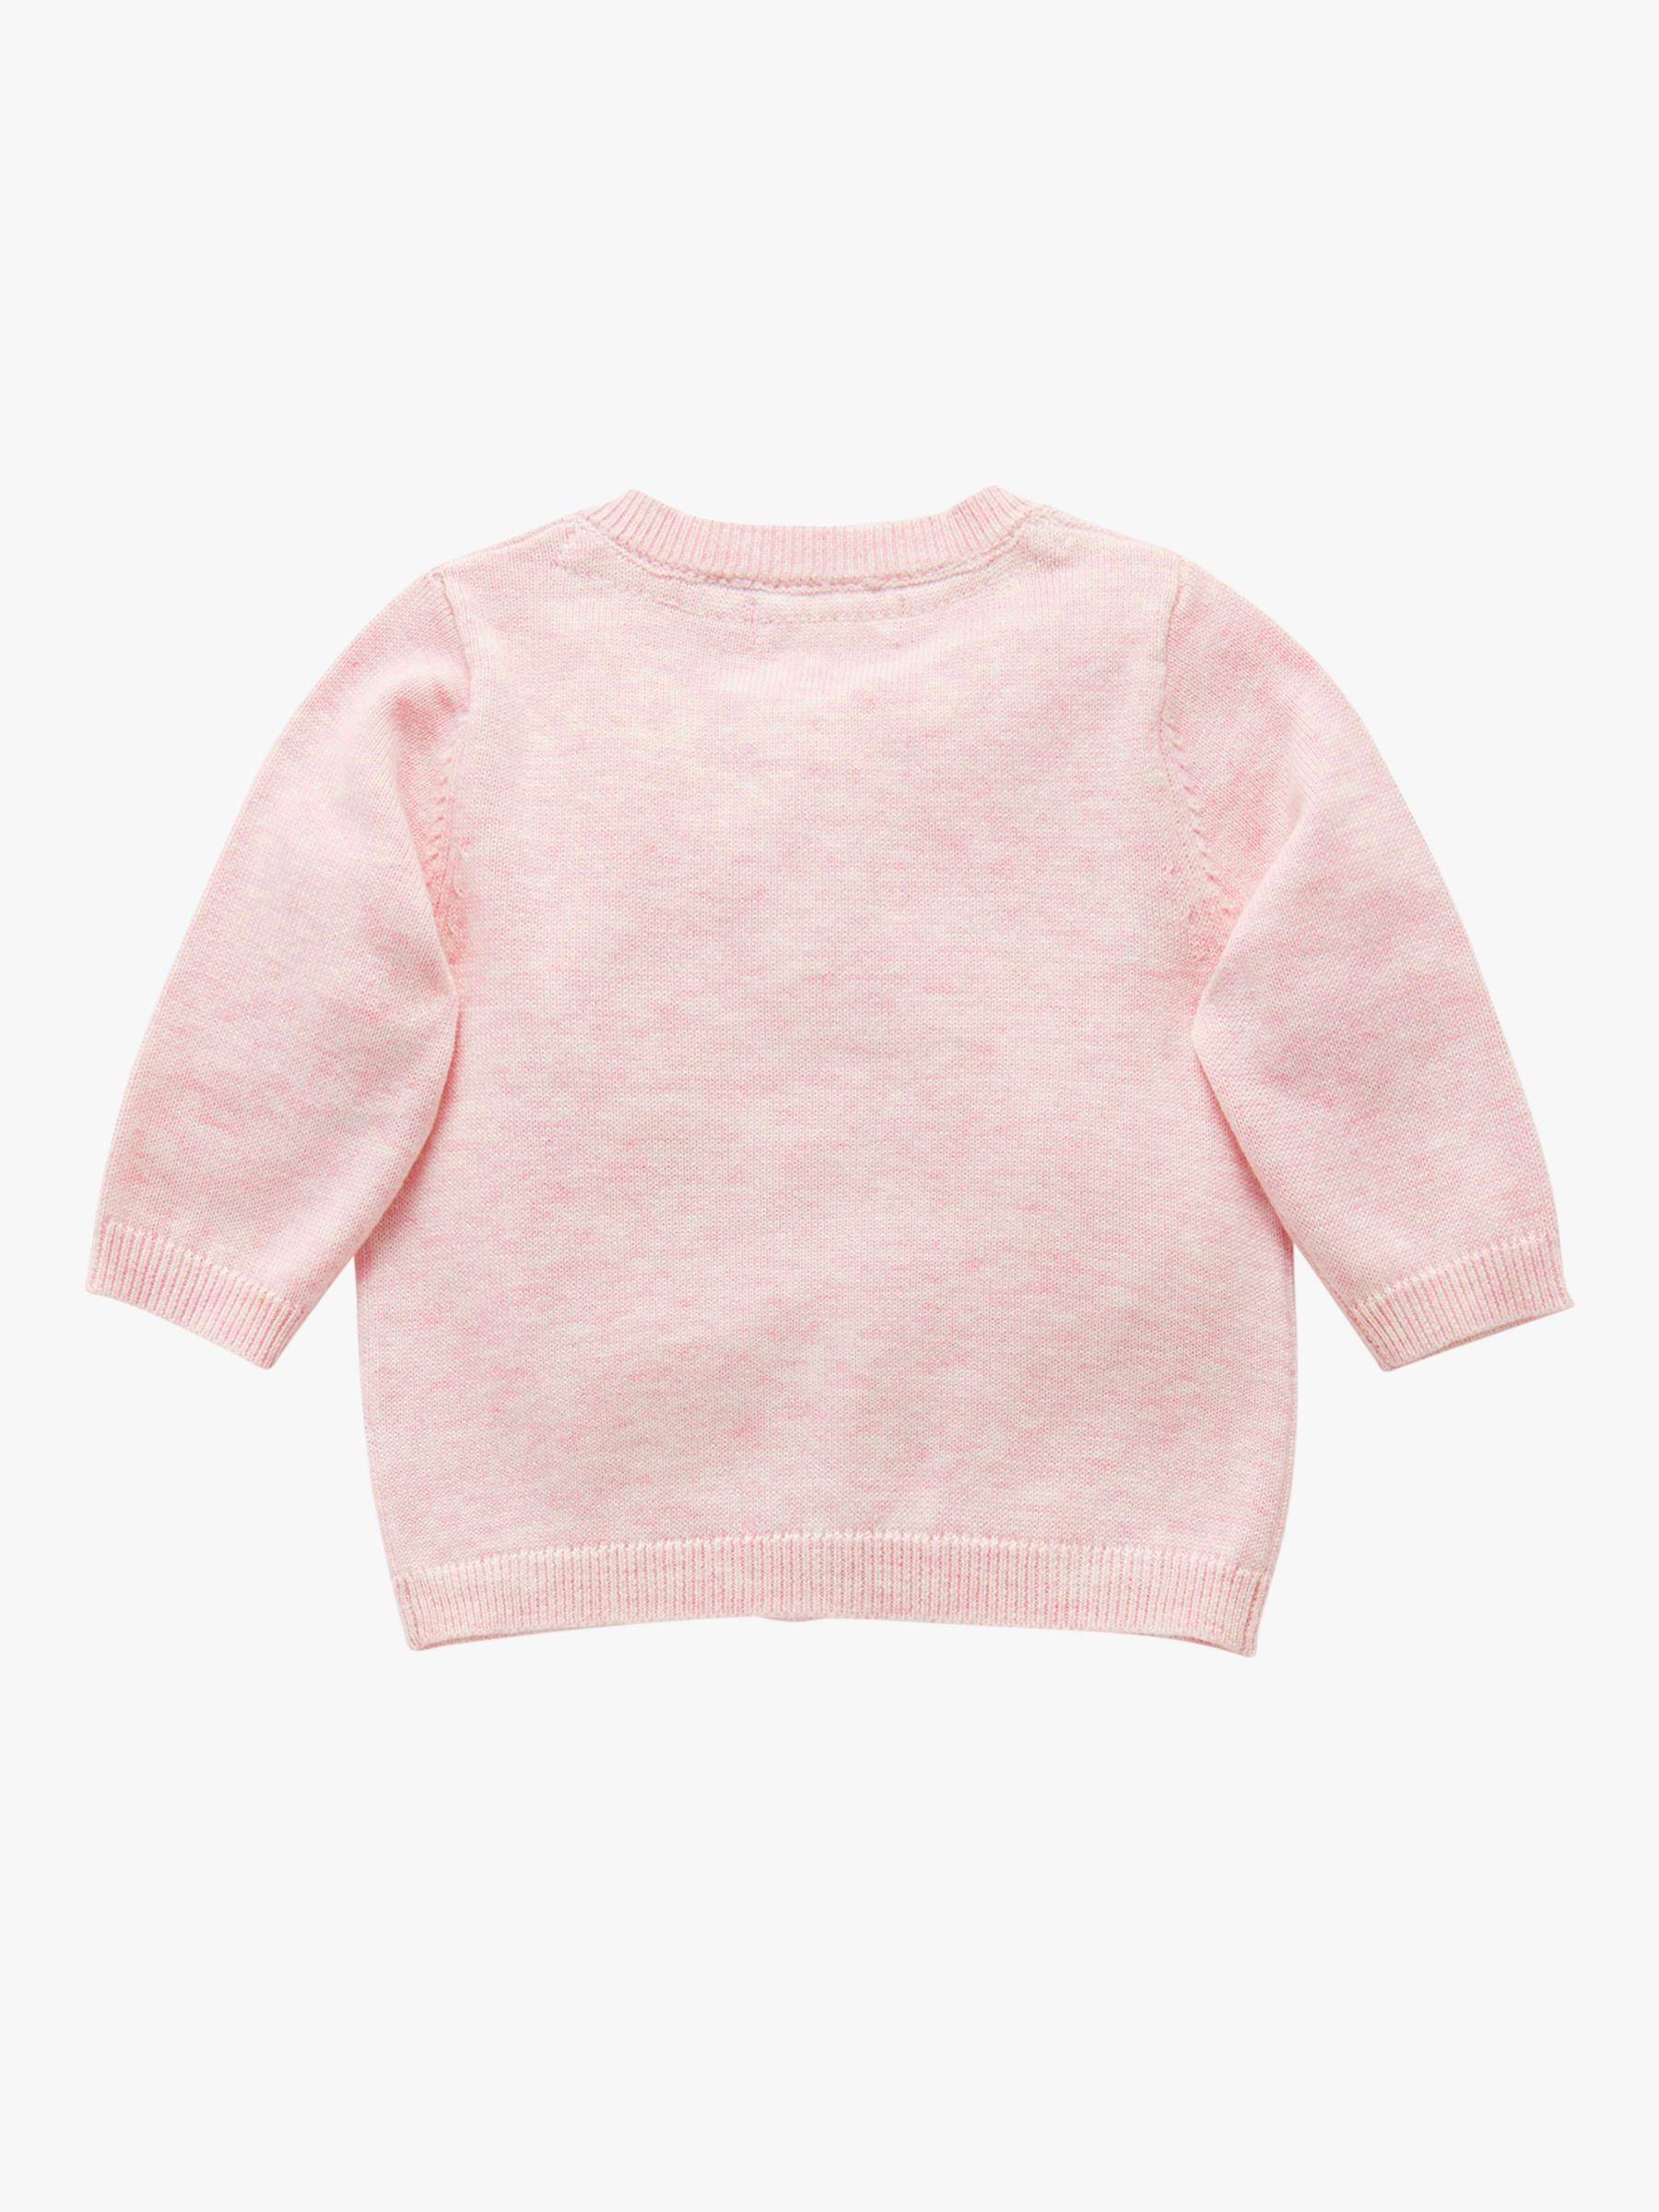 Purebaby Organic Cotton Cardigan, Pale Pink Melange, Newborn